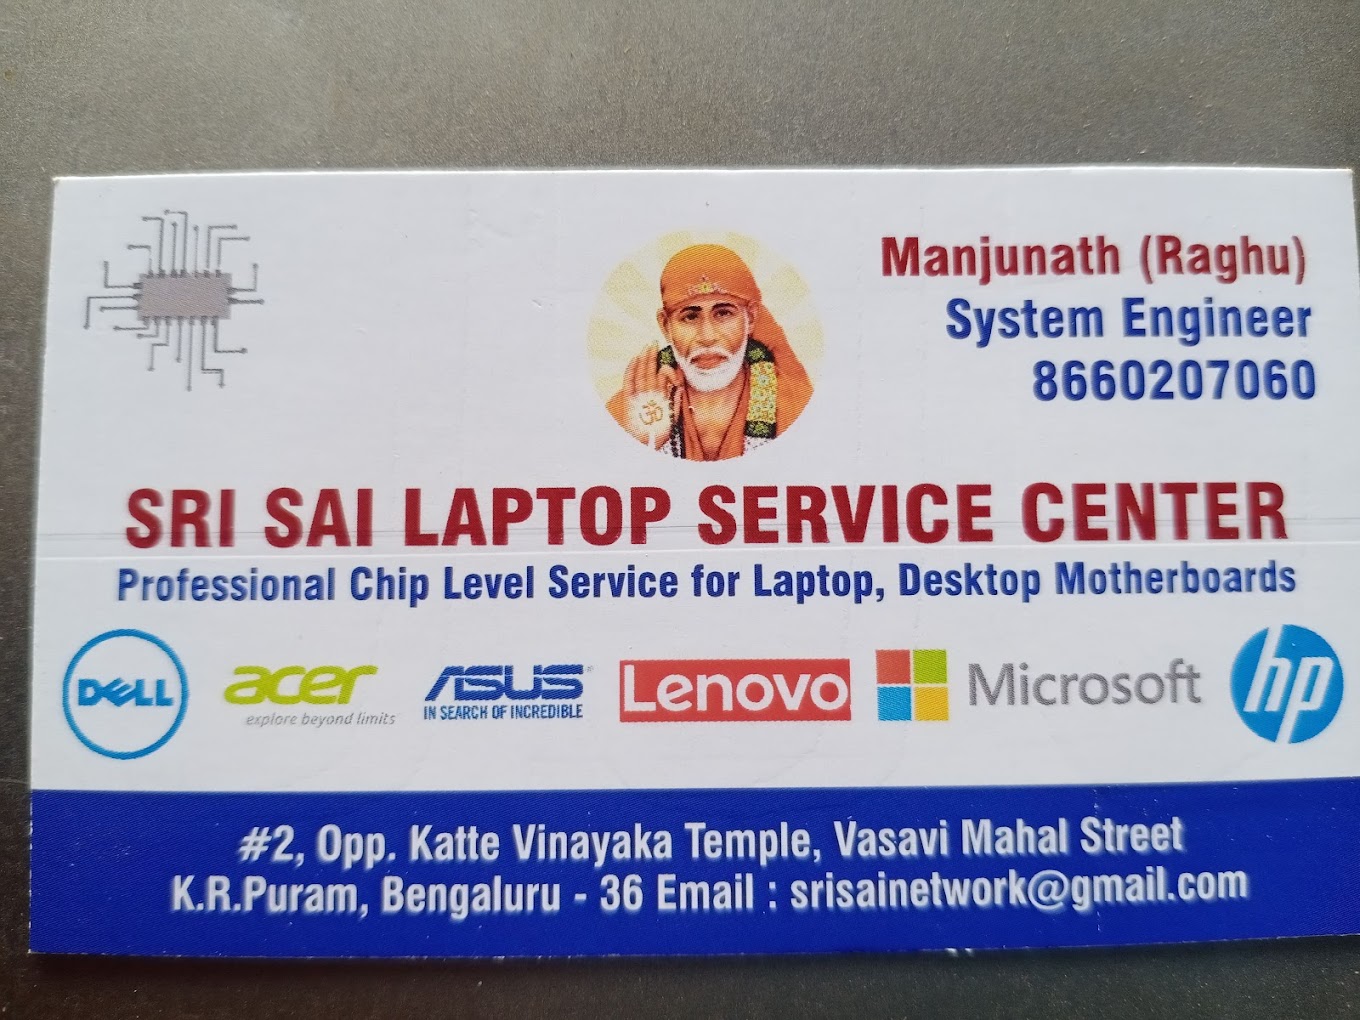 Sri Sai Laptop Service Center